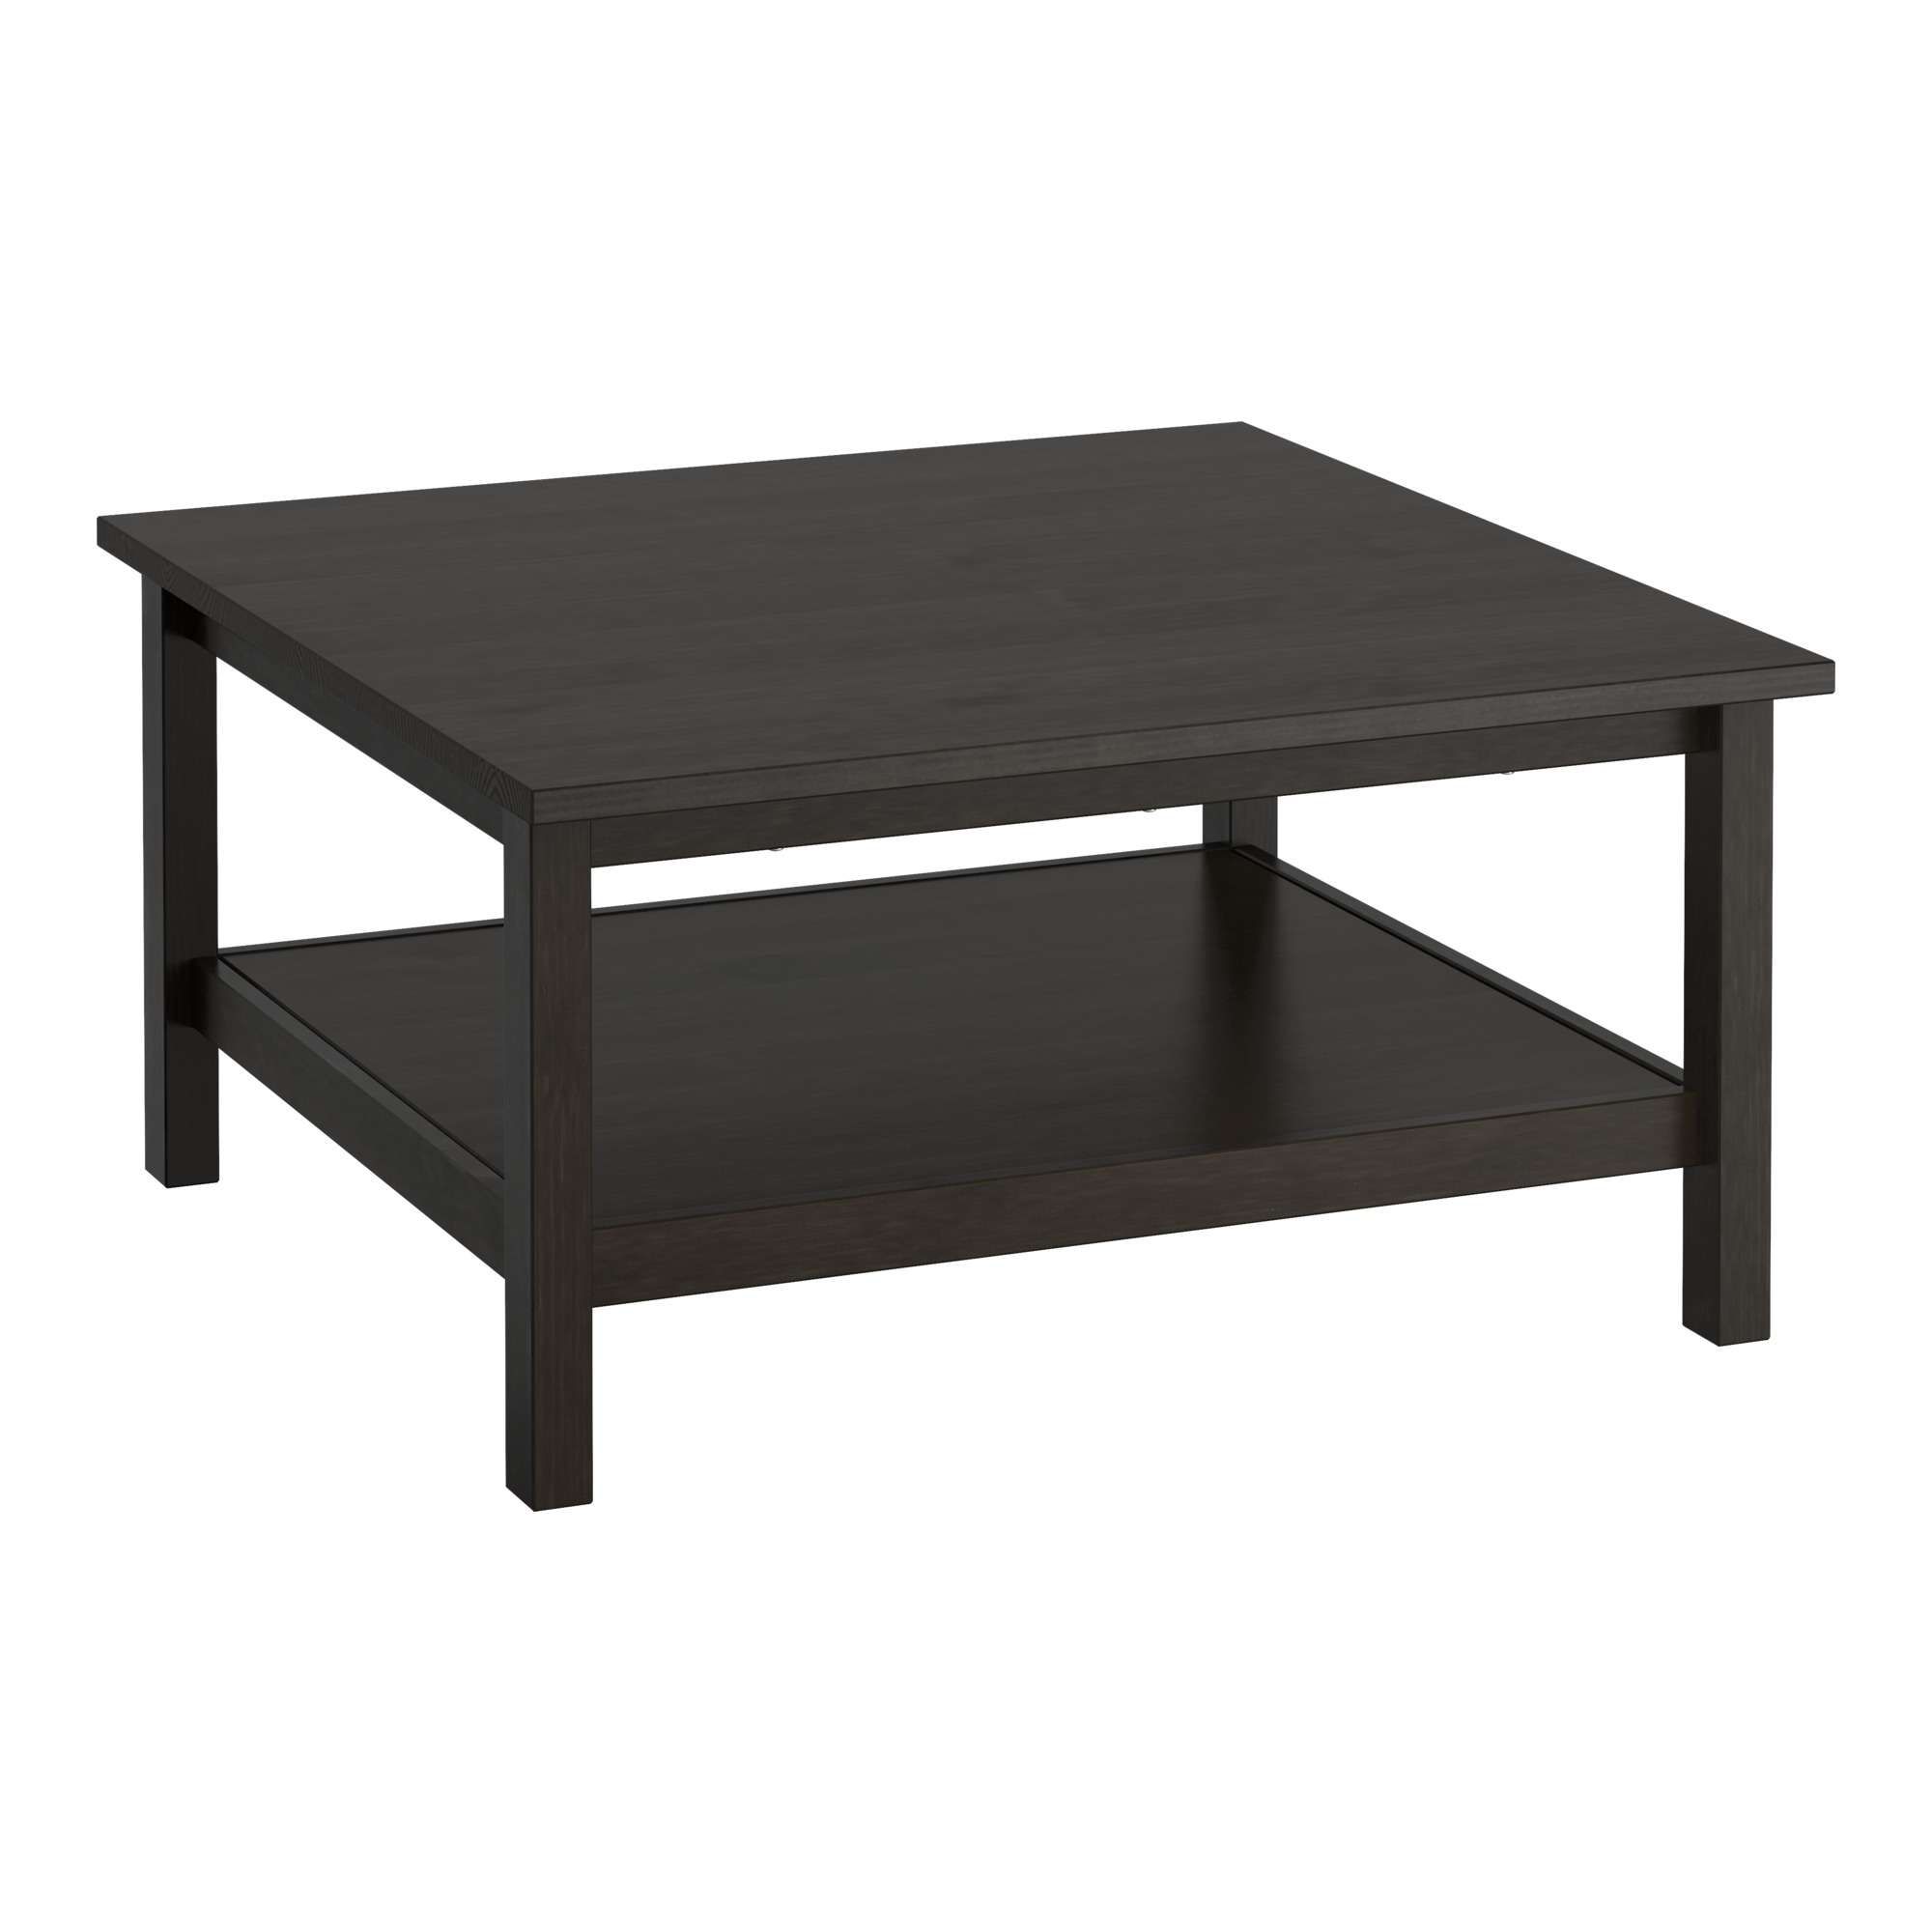 2017 Square Dark Wood Coffee Tables Inside Hemnes Coffee Table – Black Brown – Ikea (View 9 of 20)